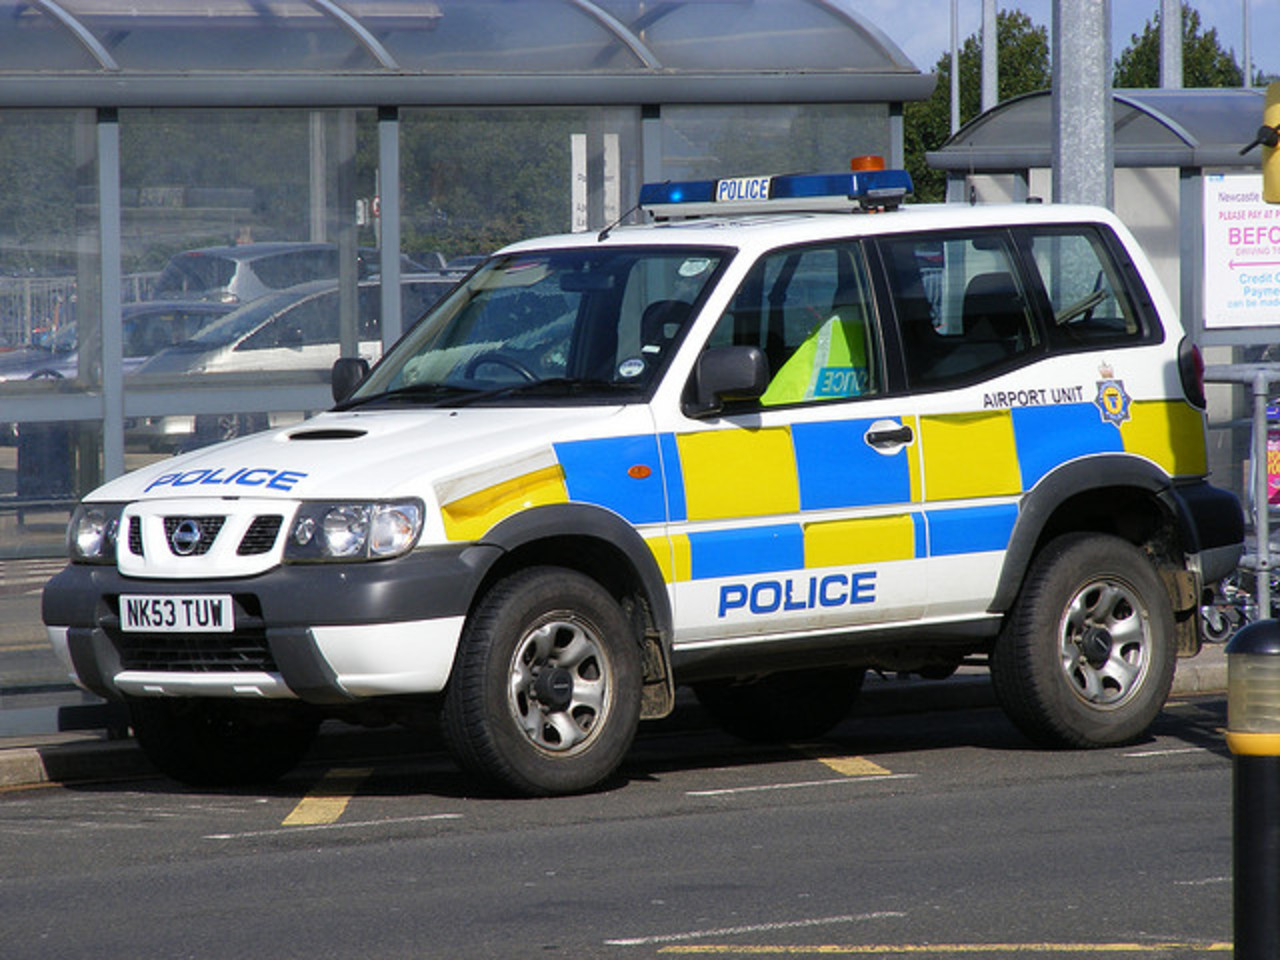 Police: Nissan Terrano NK53TUW Northumbria Police Airport Unit ...